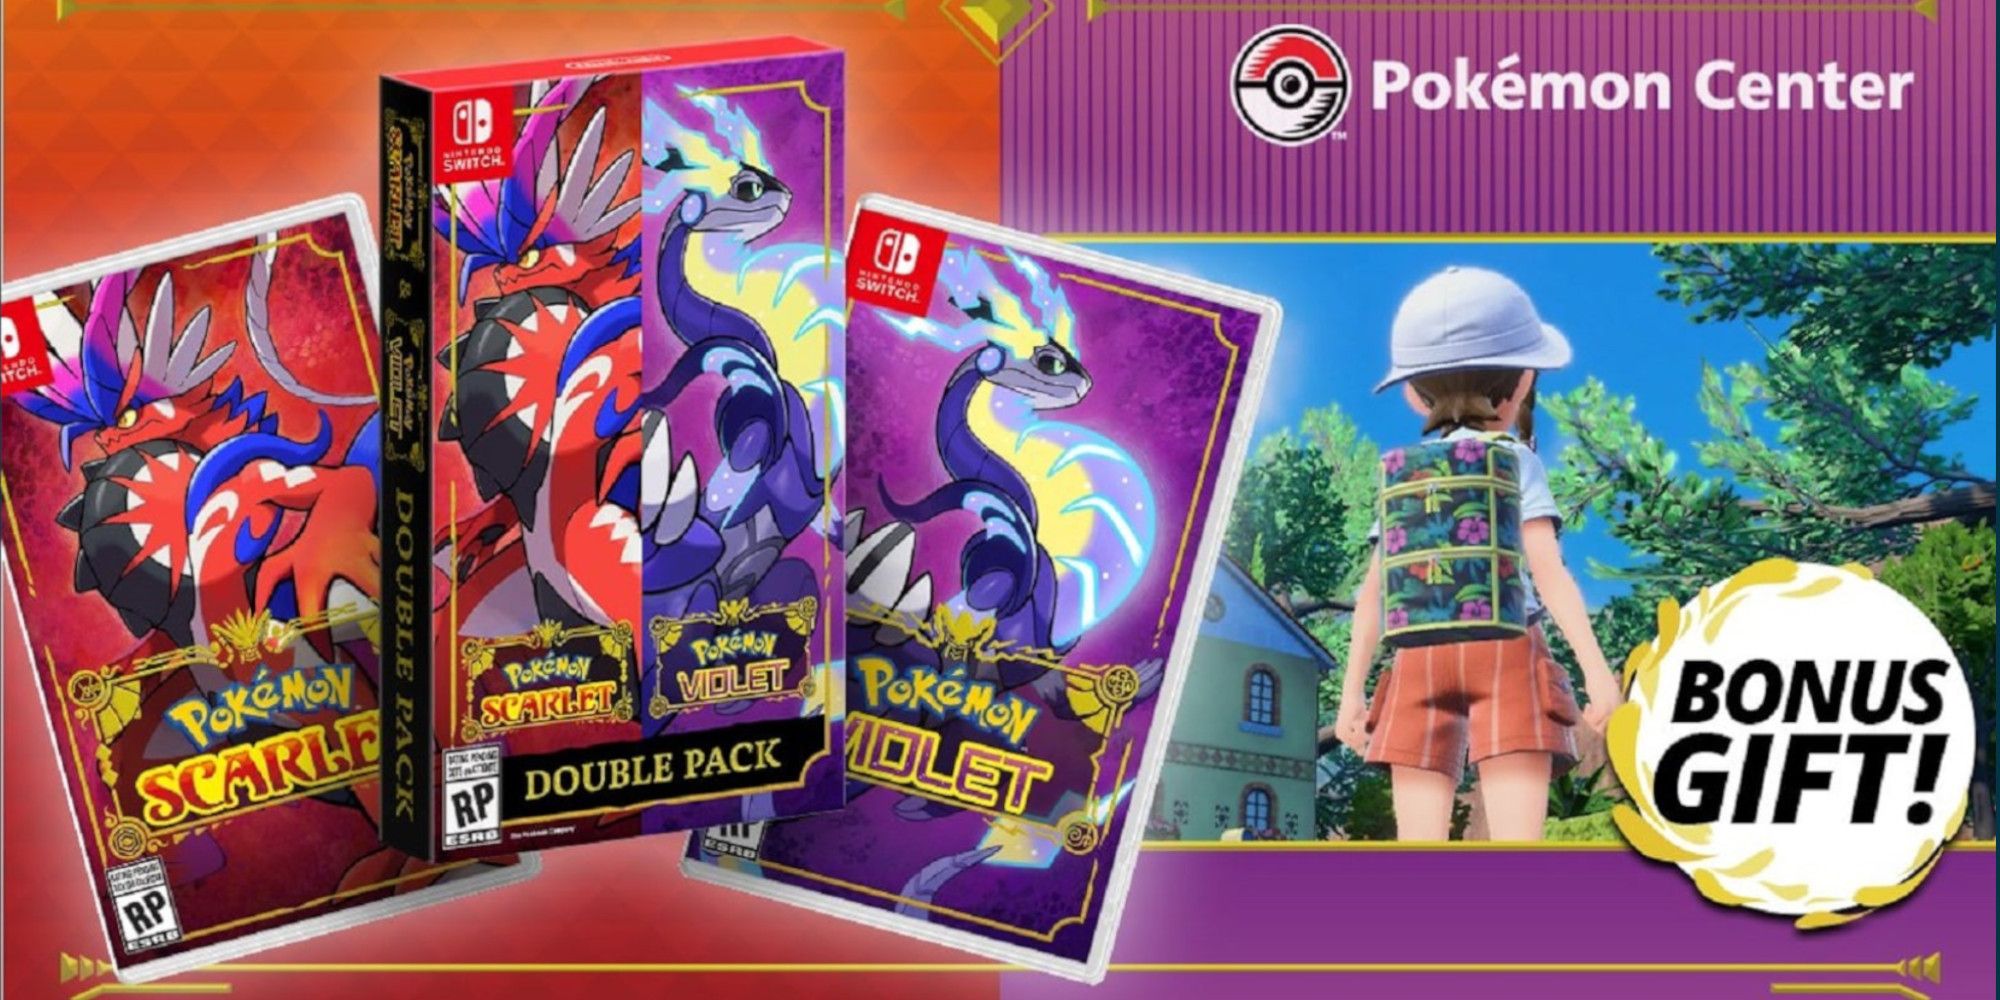 2022 Pokemon Scarlet and Violet GameStop Exclusive Promotional Promo Bag  18x14